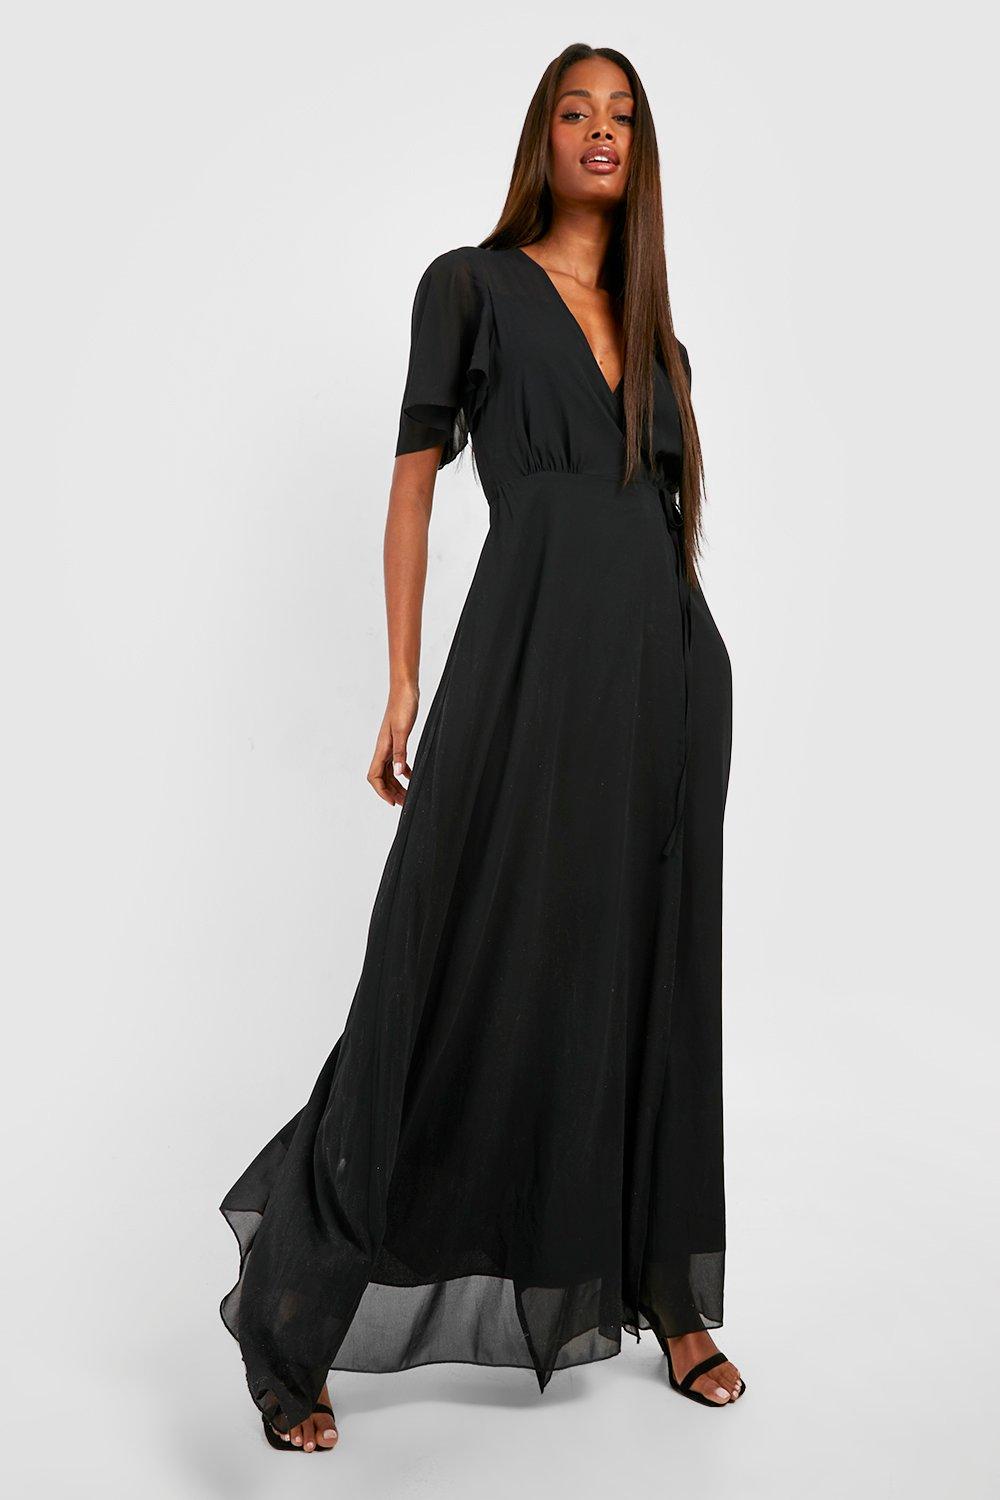 black maxi dress ireland